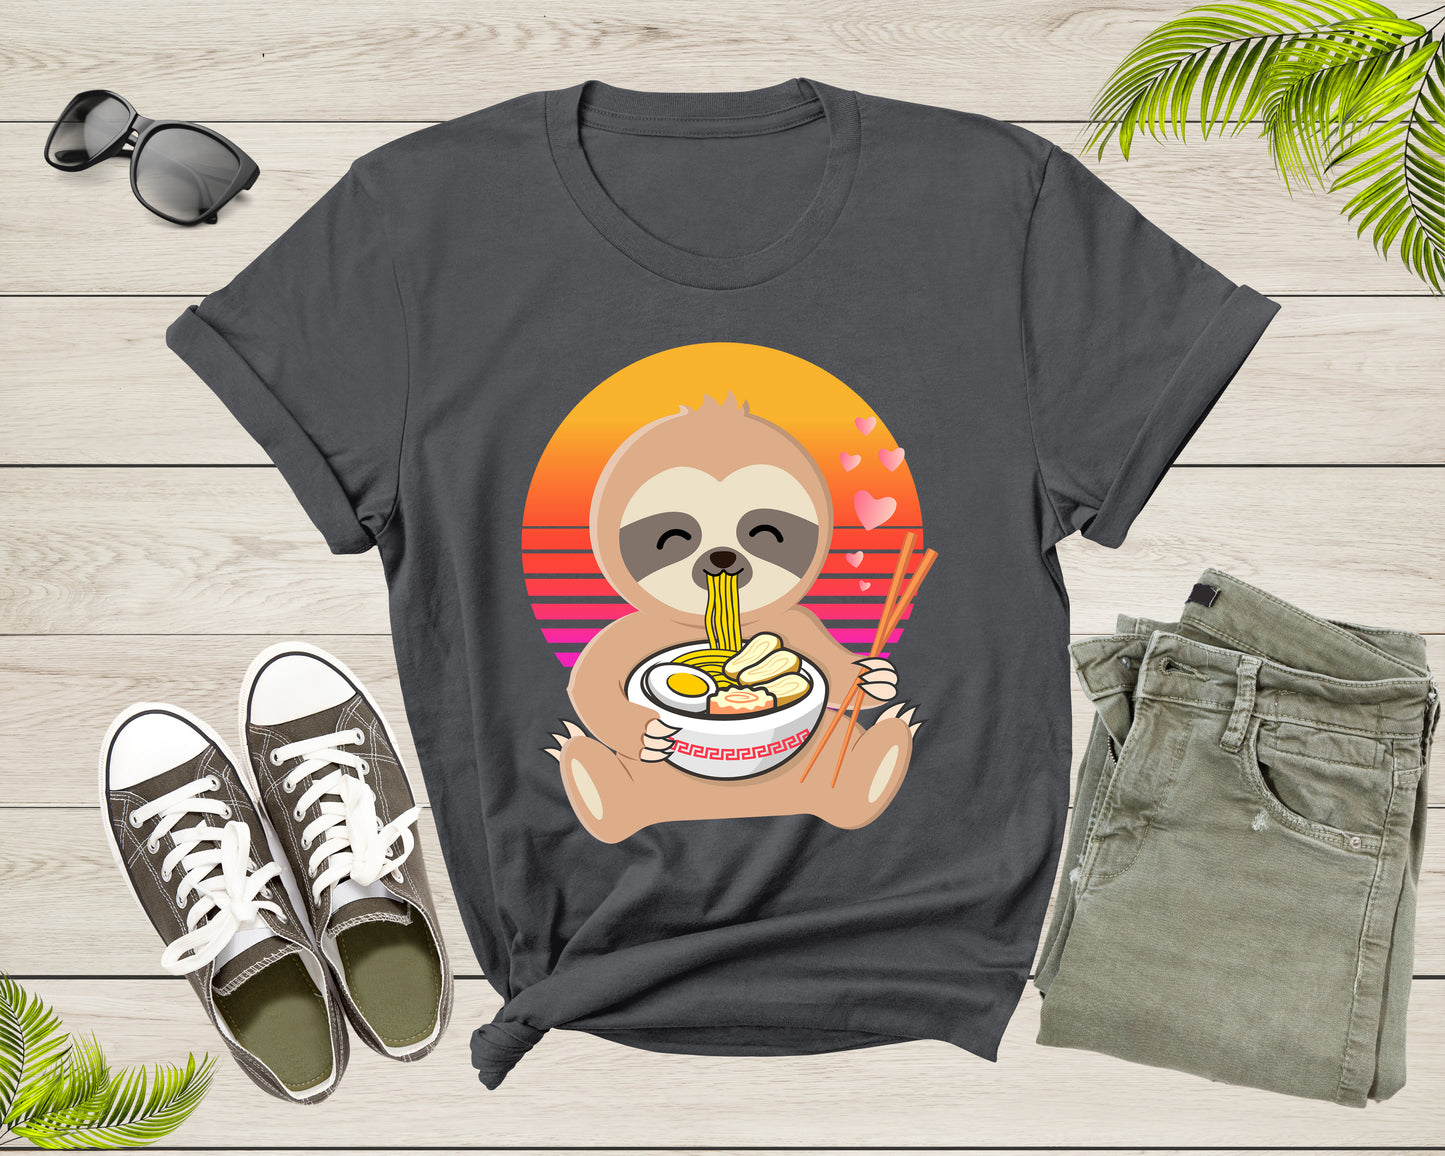 Cute Sloth Mascot Eating Japanese Ramen Noodle Retro Sunset T-Shirt Sloth Lover Gift T Shirt for Men Women Kids Boys Girls Graphic Tshirt